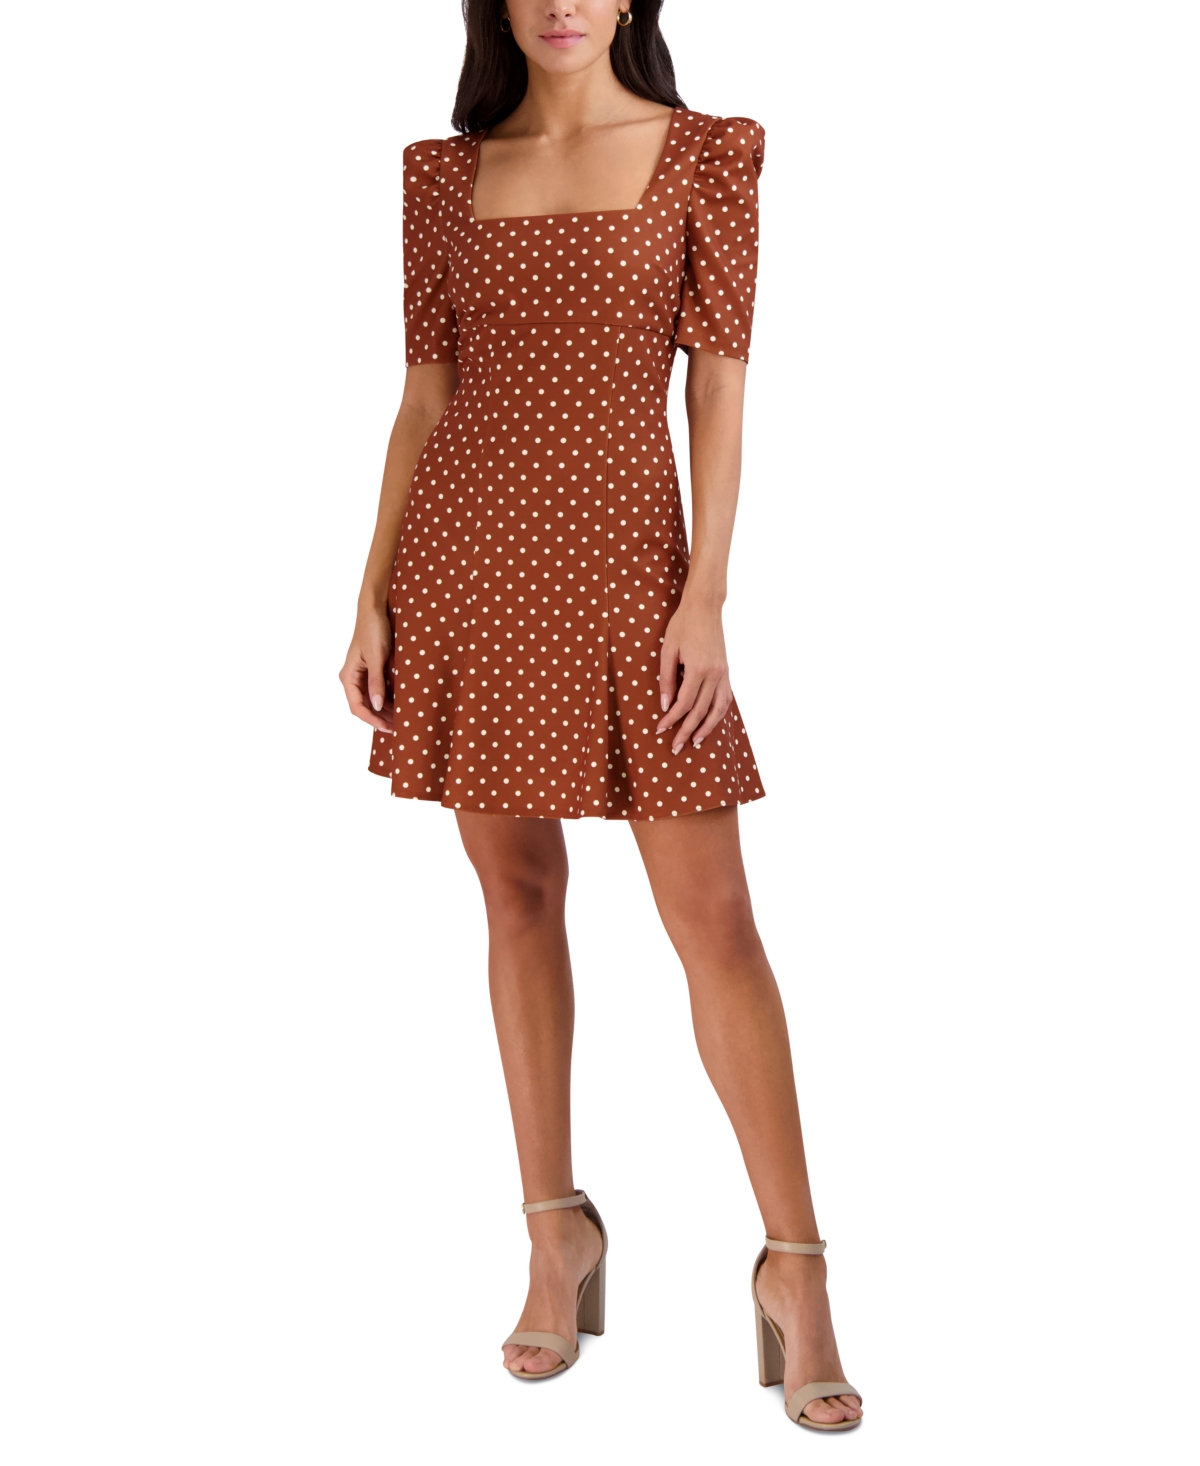 Women's Square-Neck Scuba-Crepe Fit & Flare Dress - Polka Dot Gingerbread